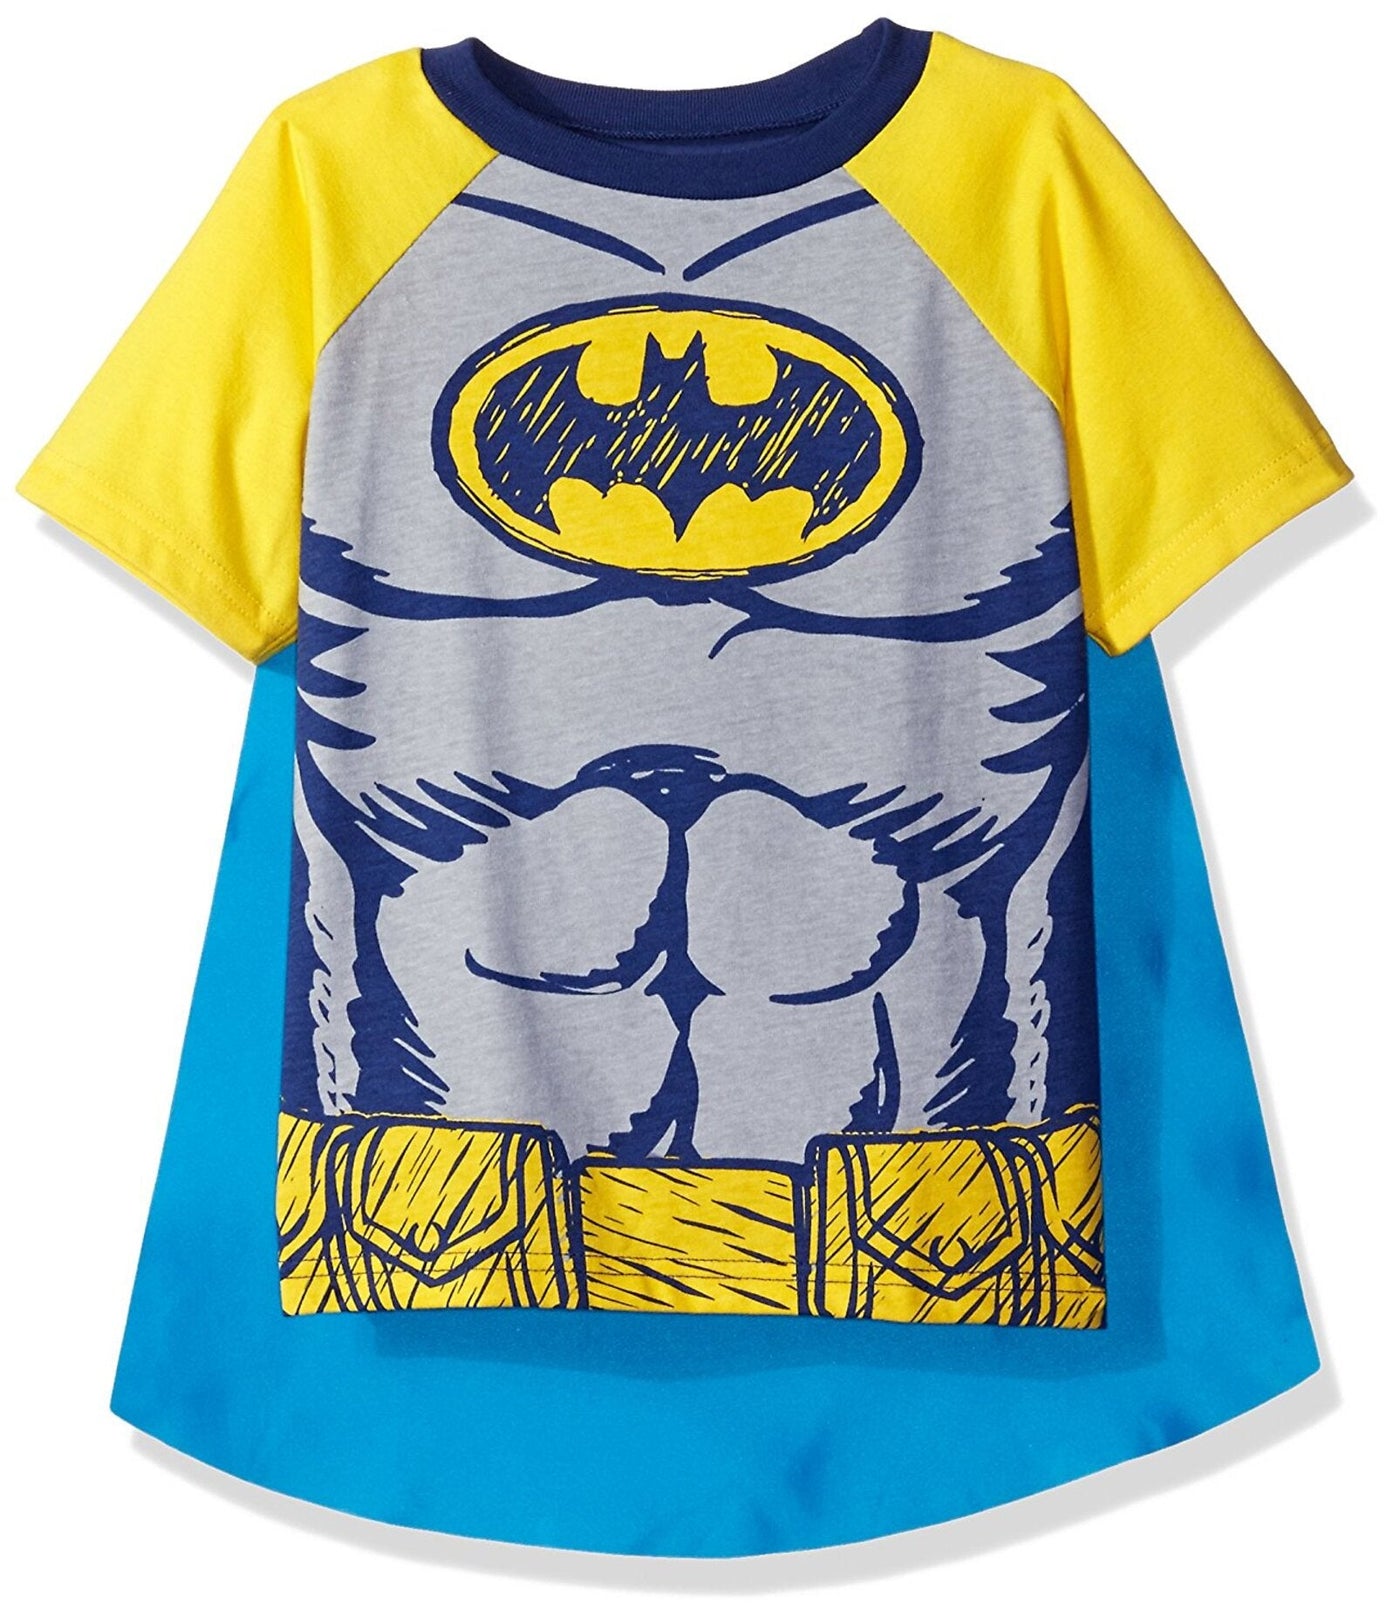 Warner Bros. Justice League Batman Cosplay T-Shirt and Cape - imagikids